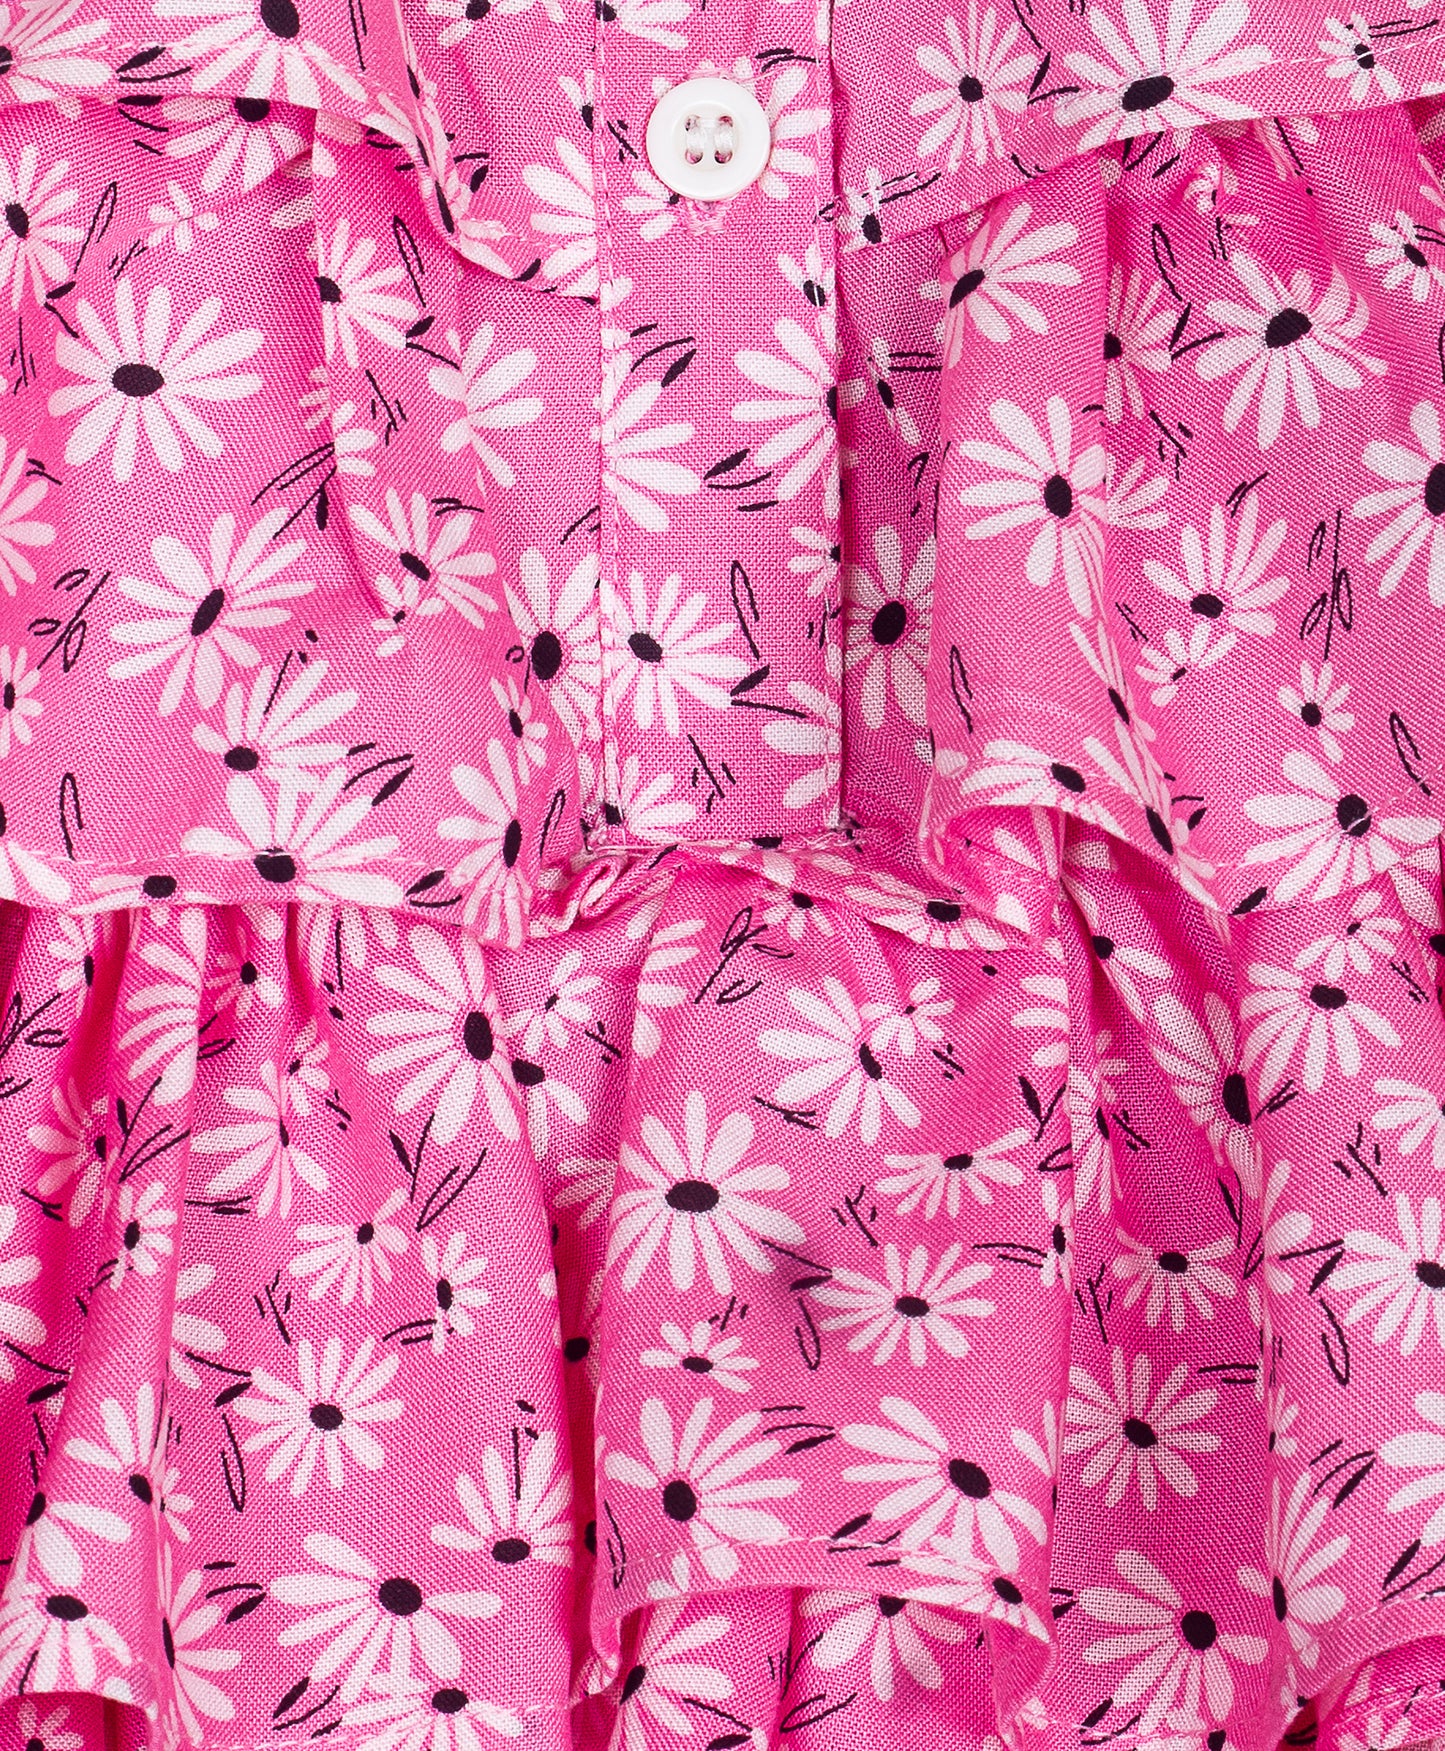 Pink daisy print infant dress